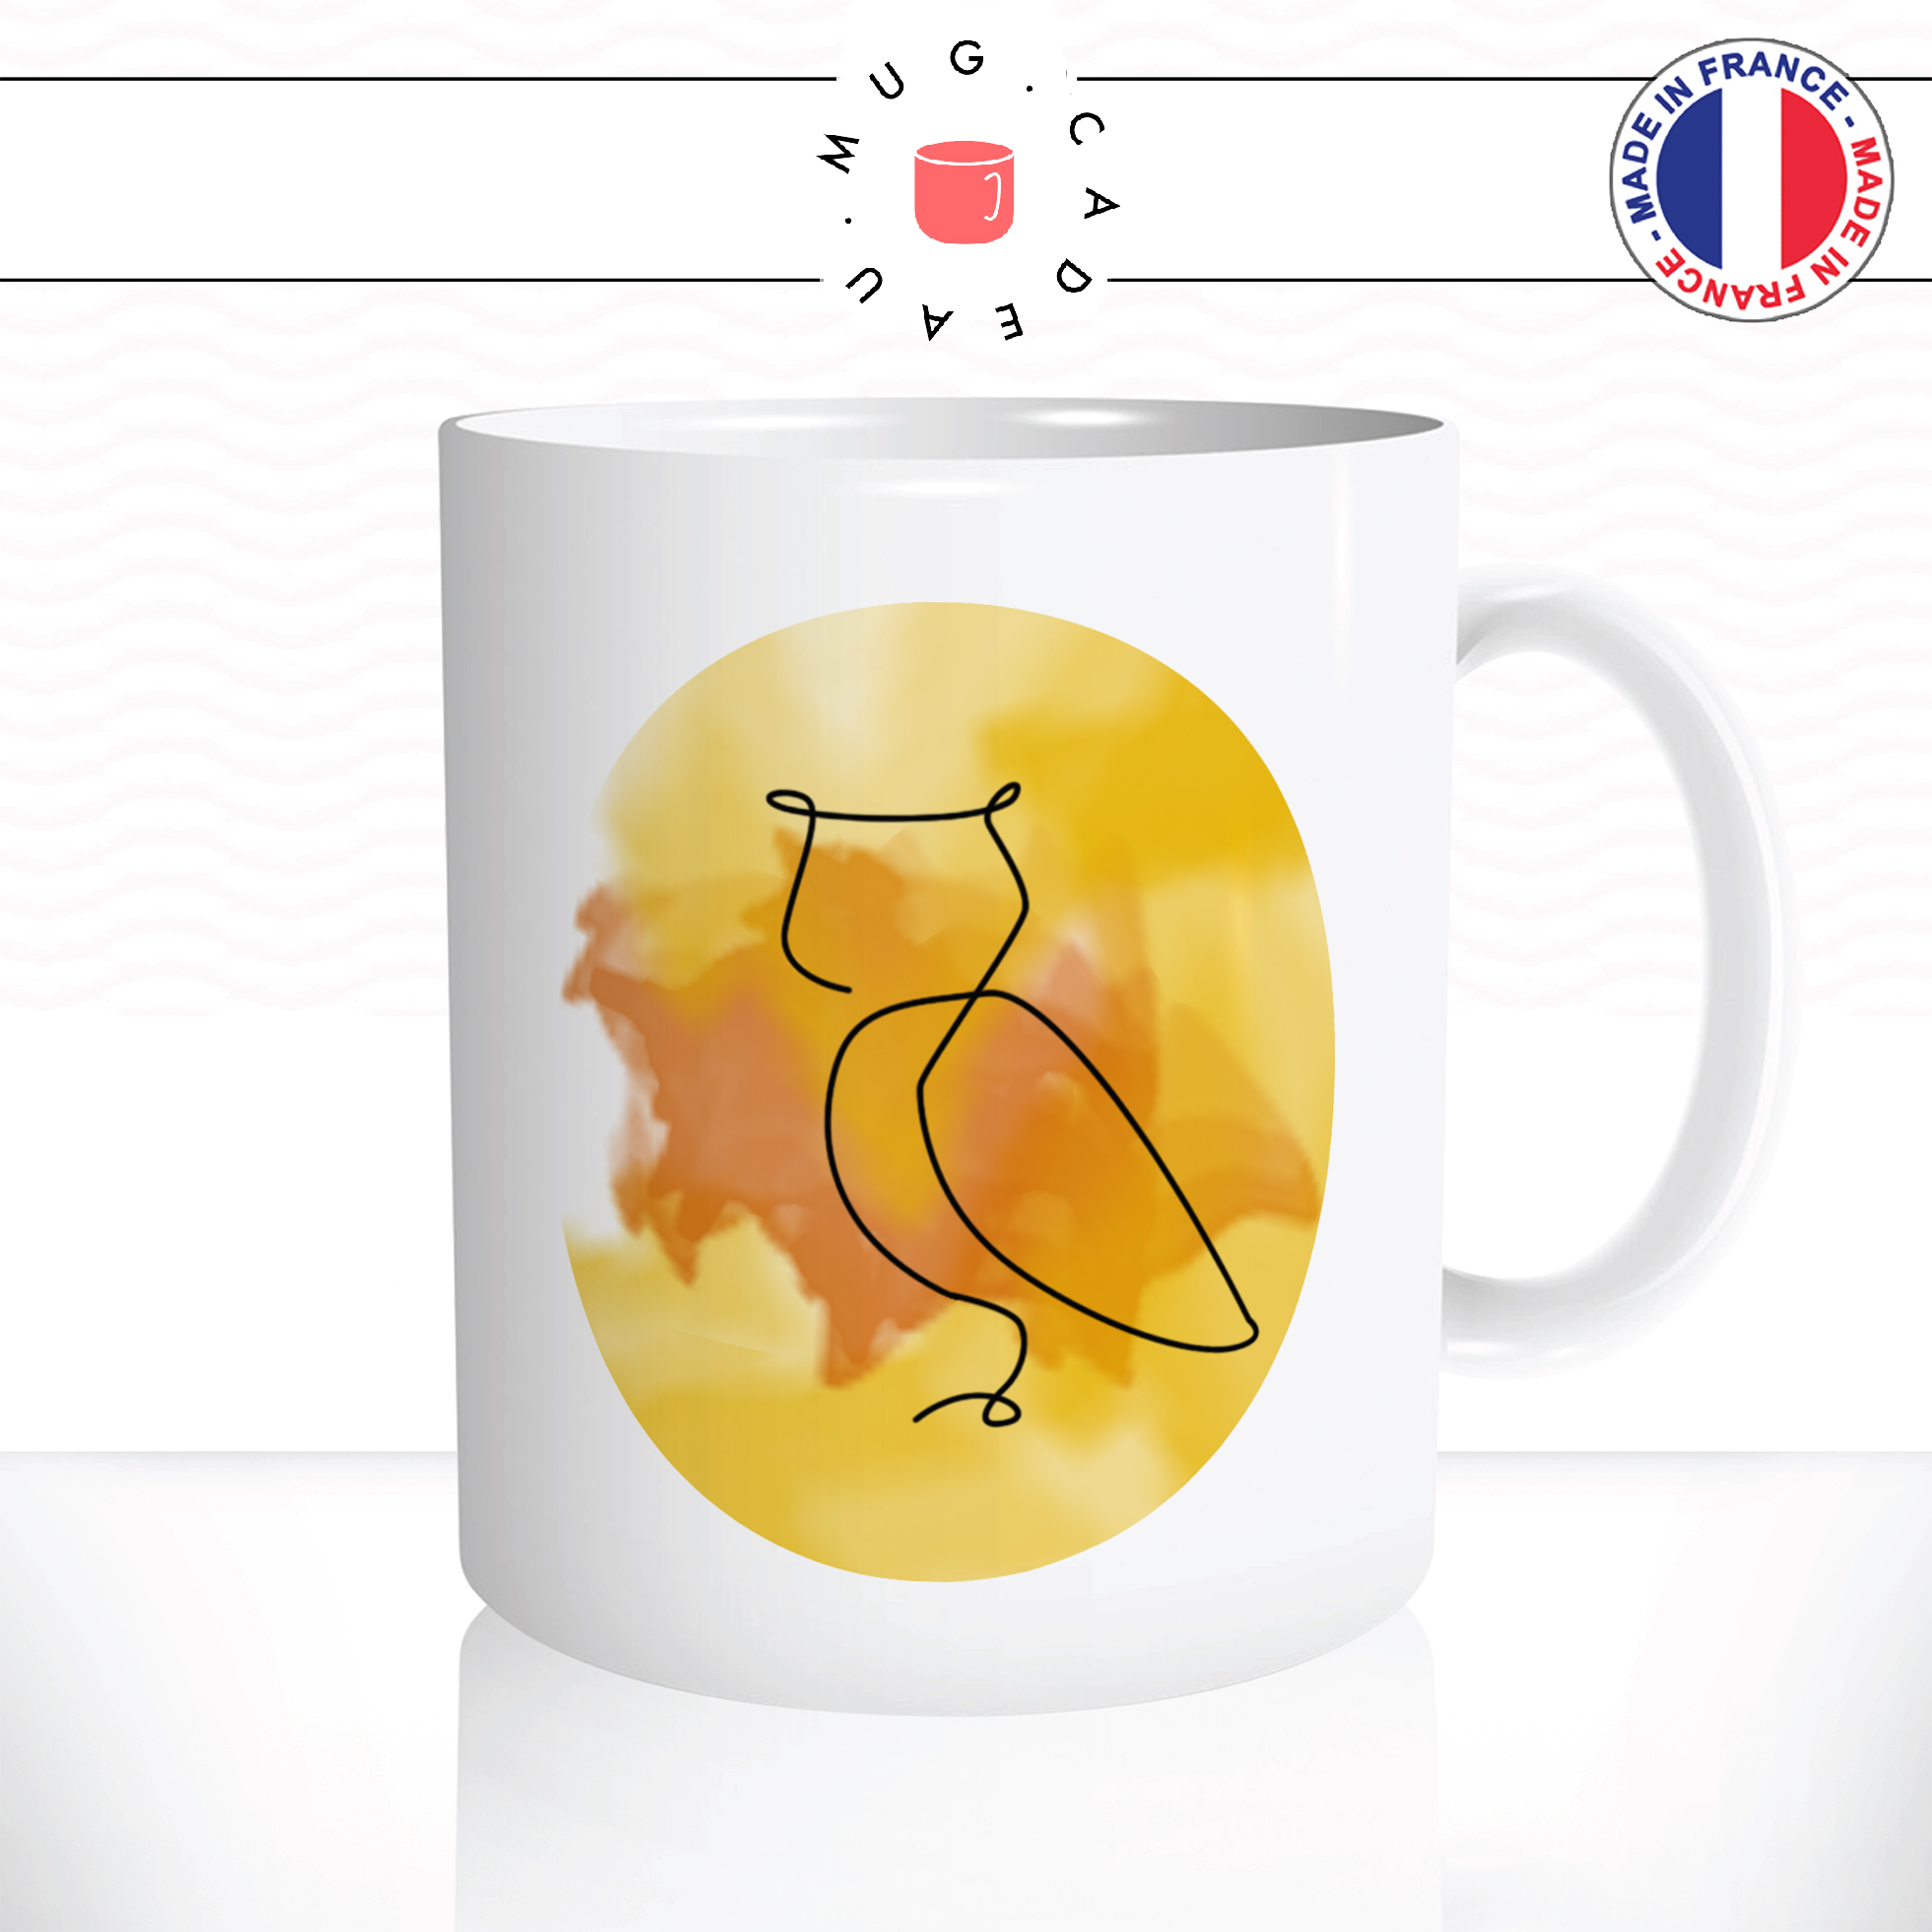 mug-tasse-ref8-oiseau-chouette-dessin-lignes-simple-noir-halo-aquarelle(-jaune-cafe-the-mugs-tasses-personnalise-anse-droite